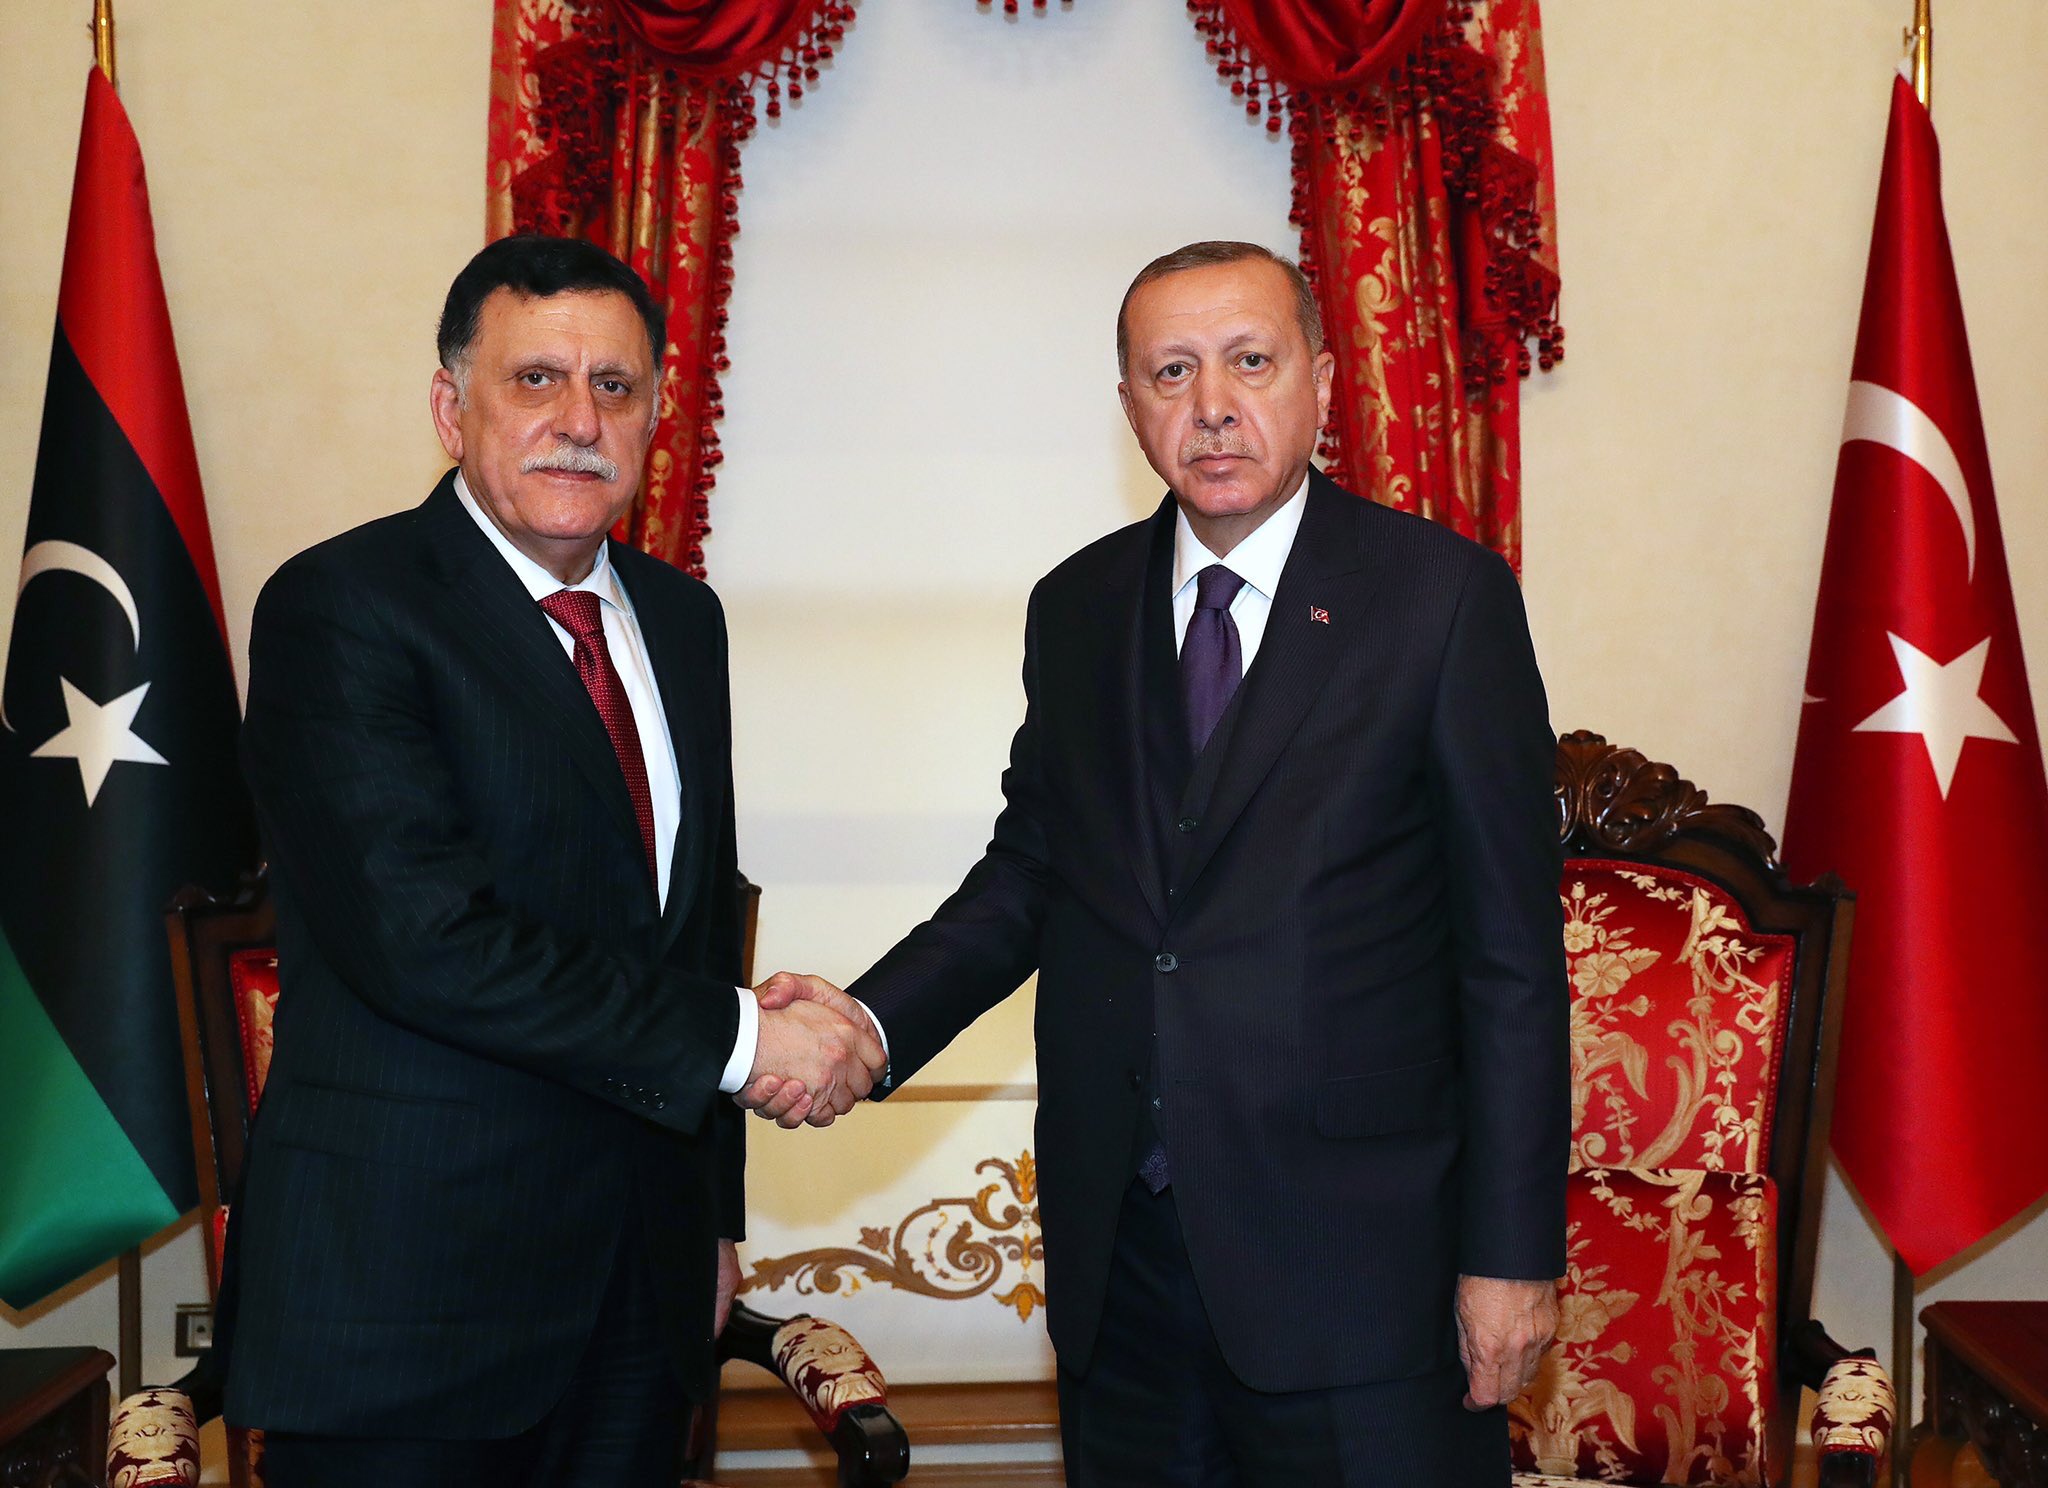 Turkish President Recep Tayyip Erdogan (R) shakes hands with head of Libya's UN-backed government, Fayez al-Sarraj